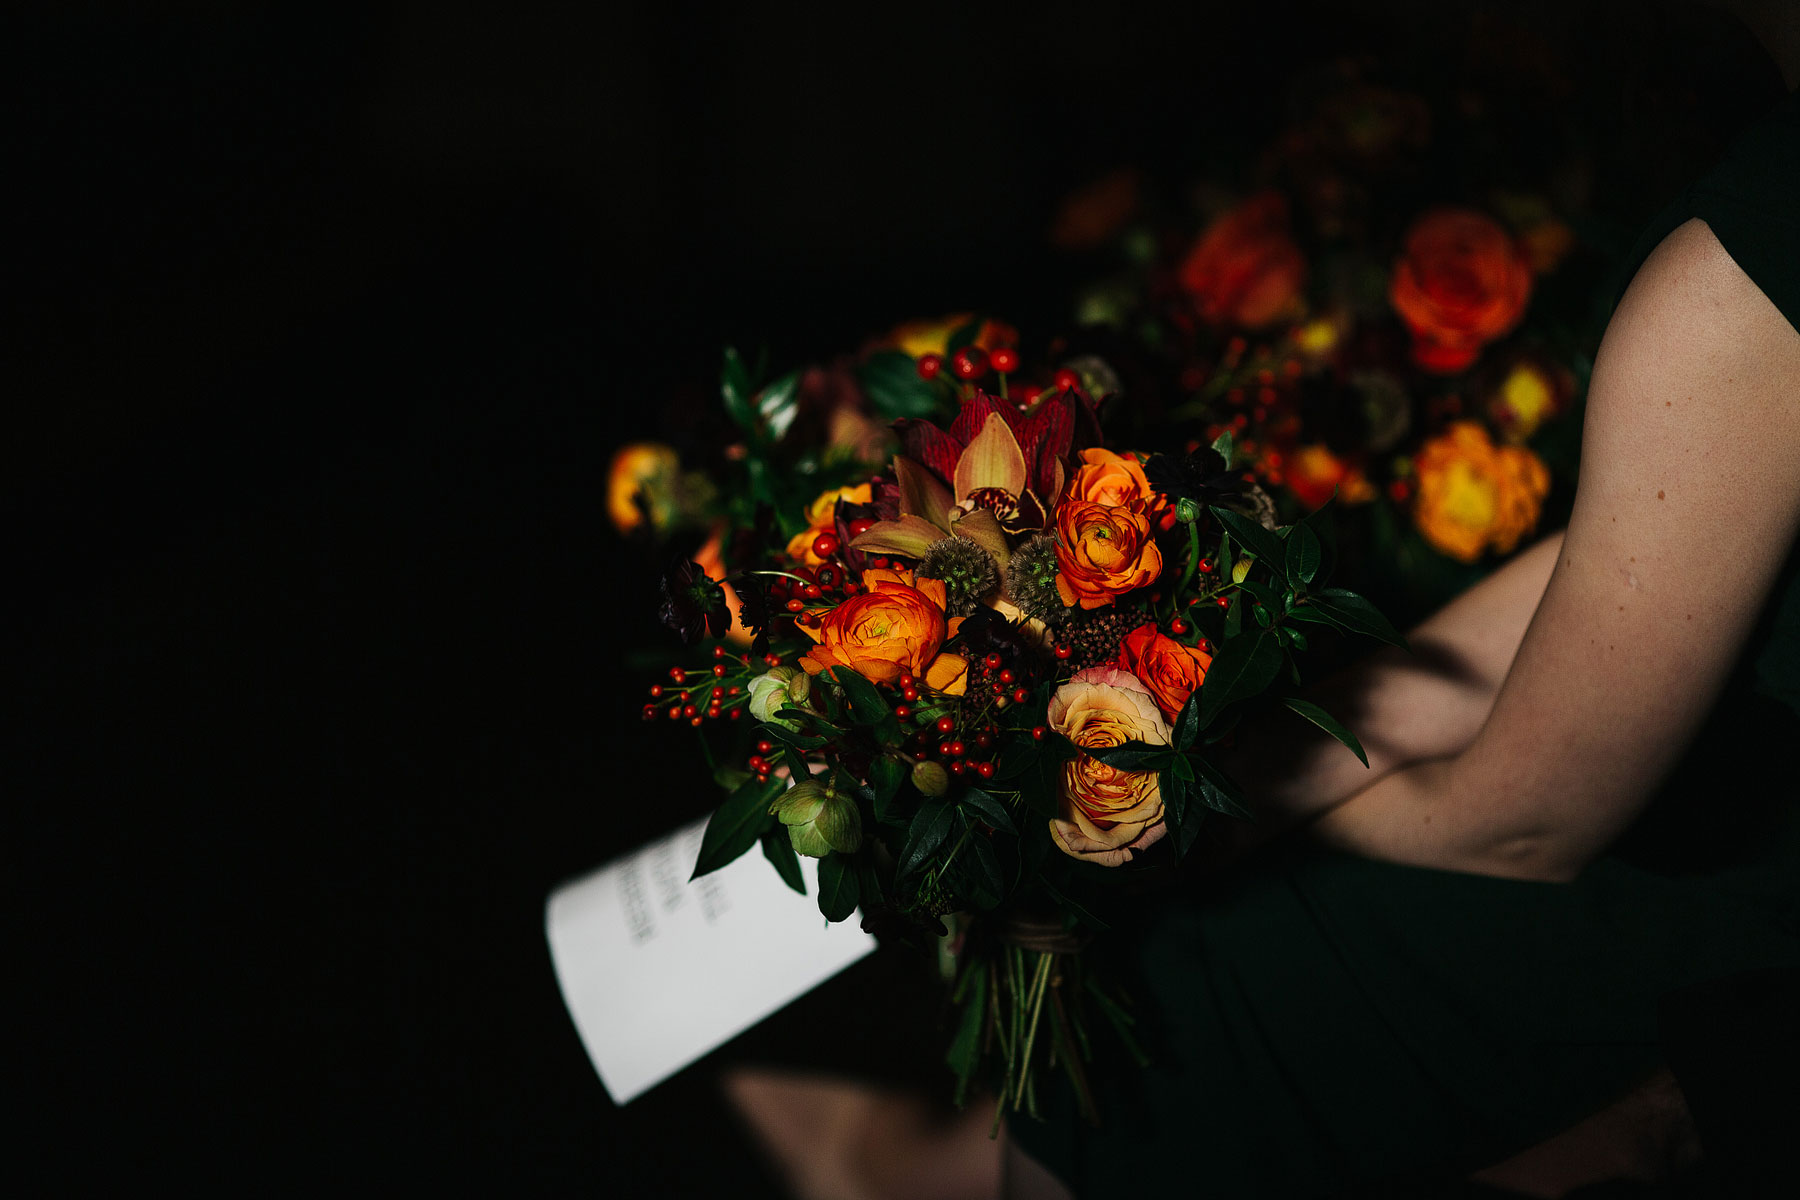 autumn wedding bouquet that has an alternative feel